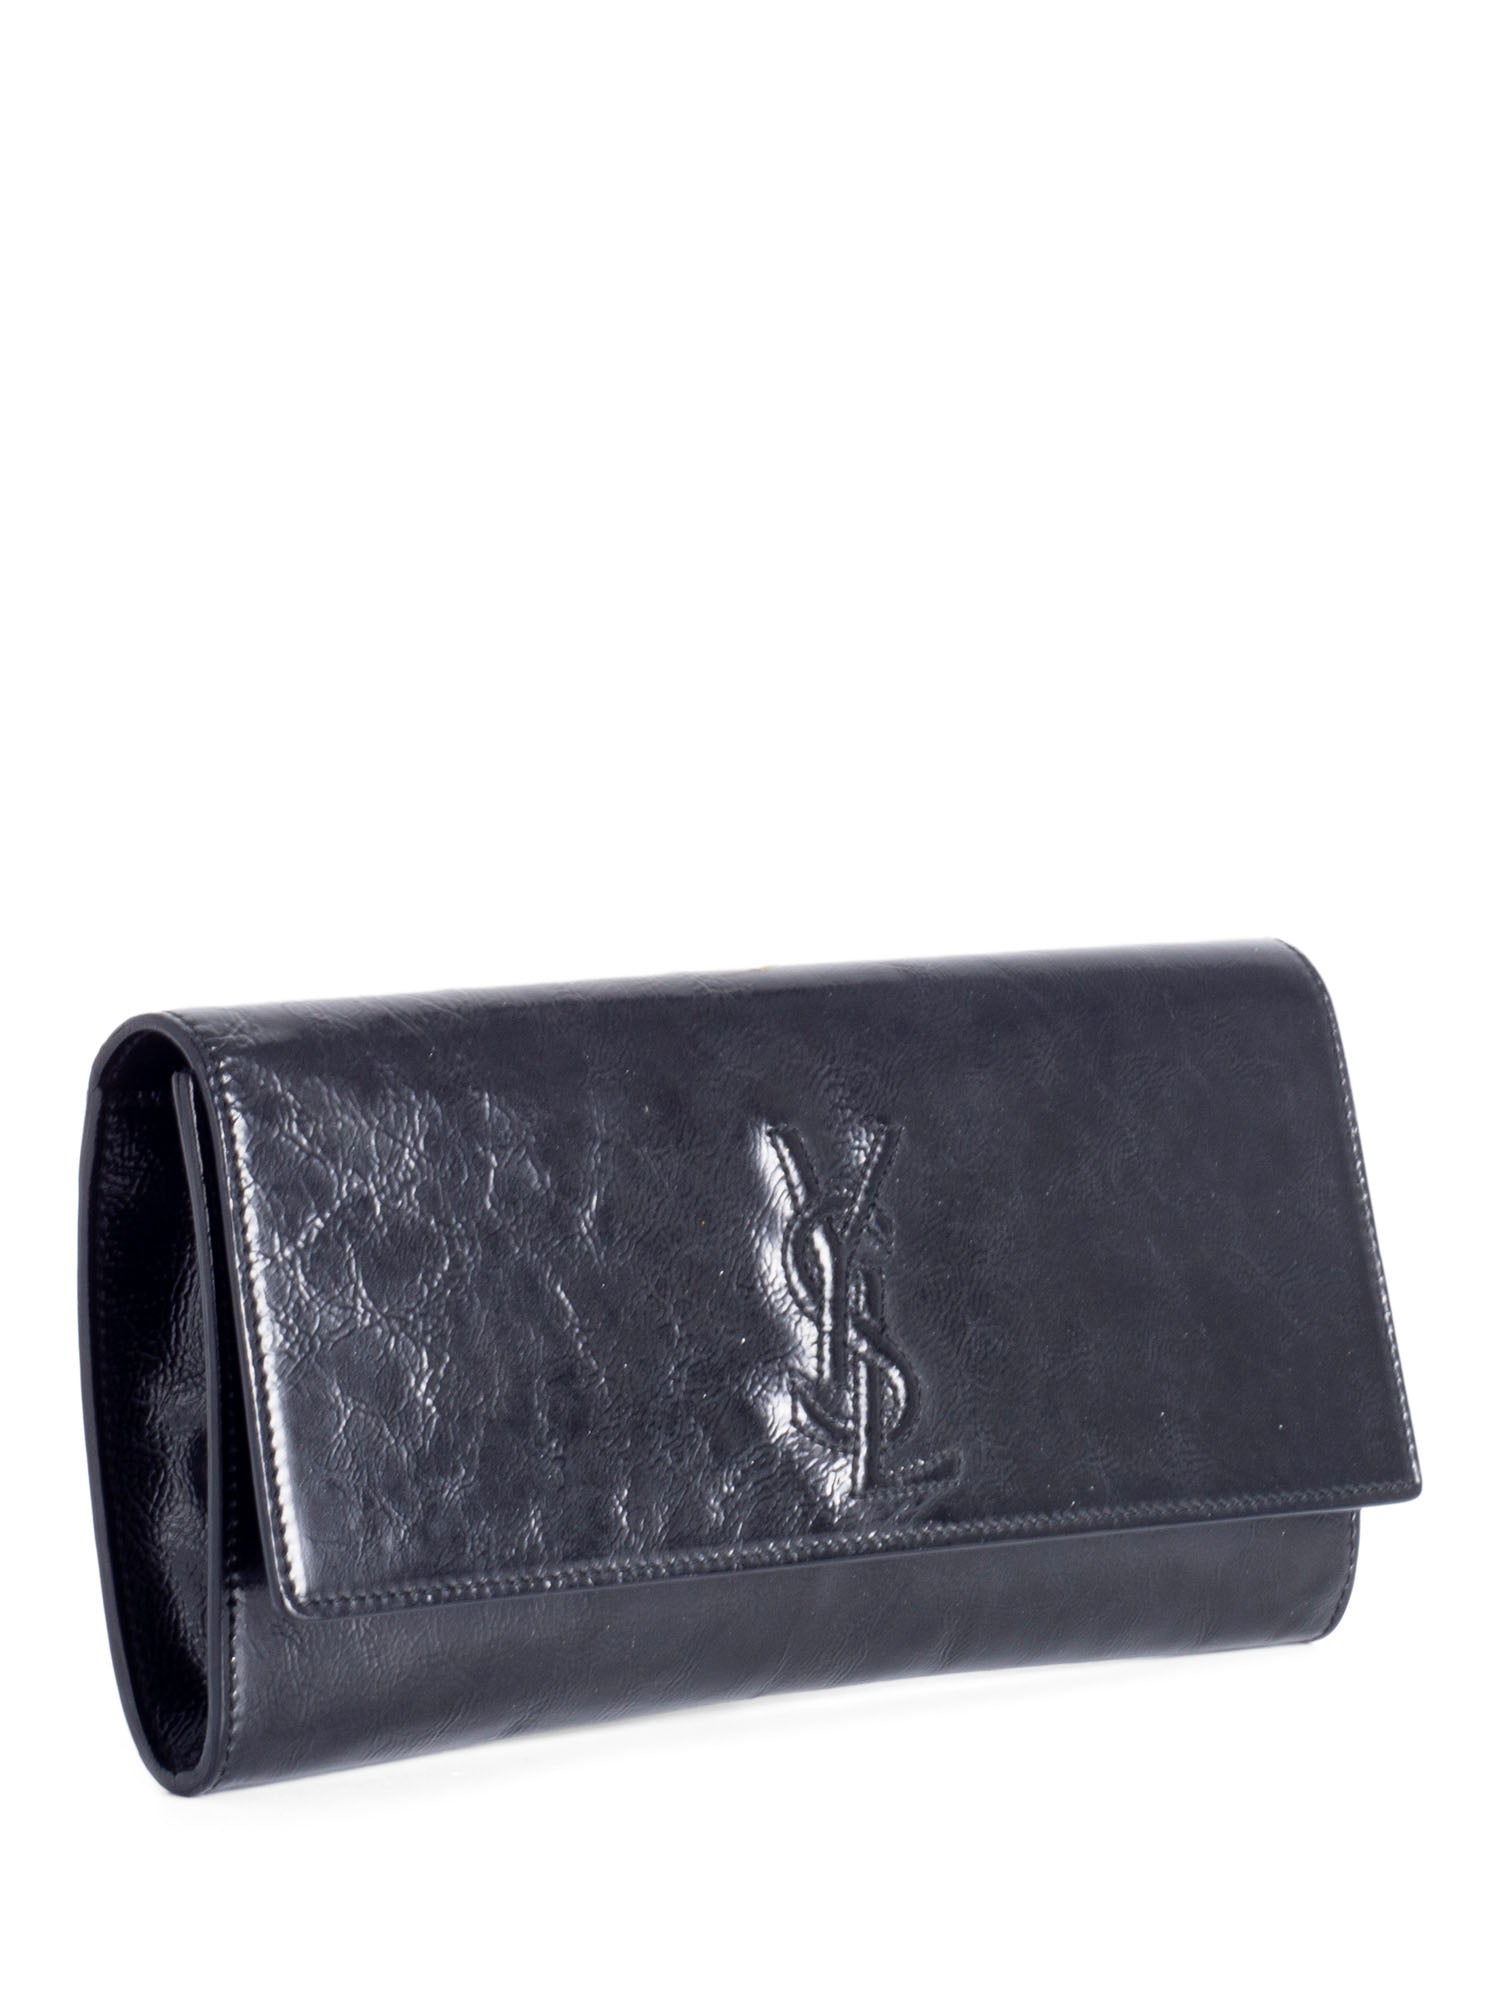 Yves Saint Laurent YSL Logo Patent Leather Flap Clutch Black-designer resale